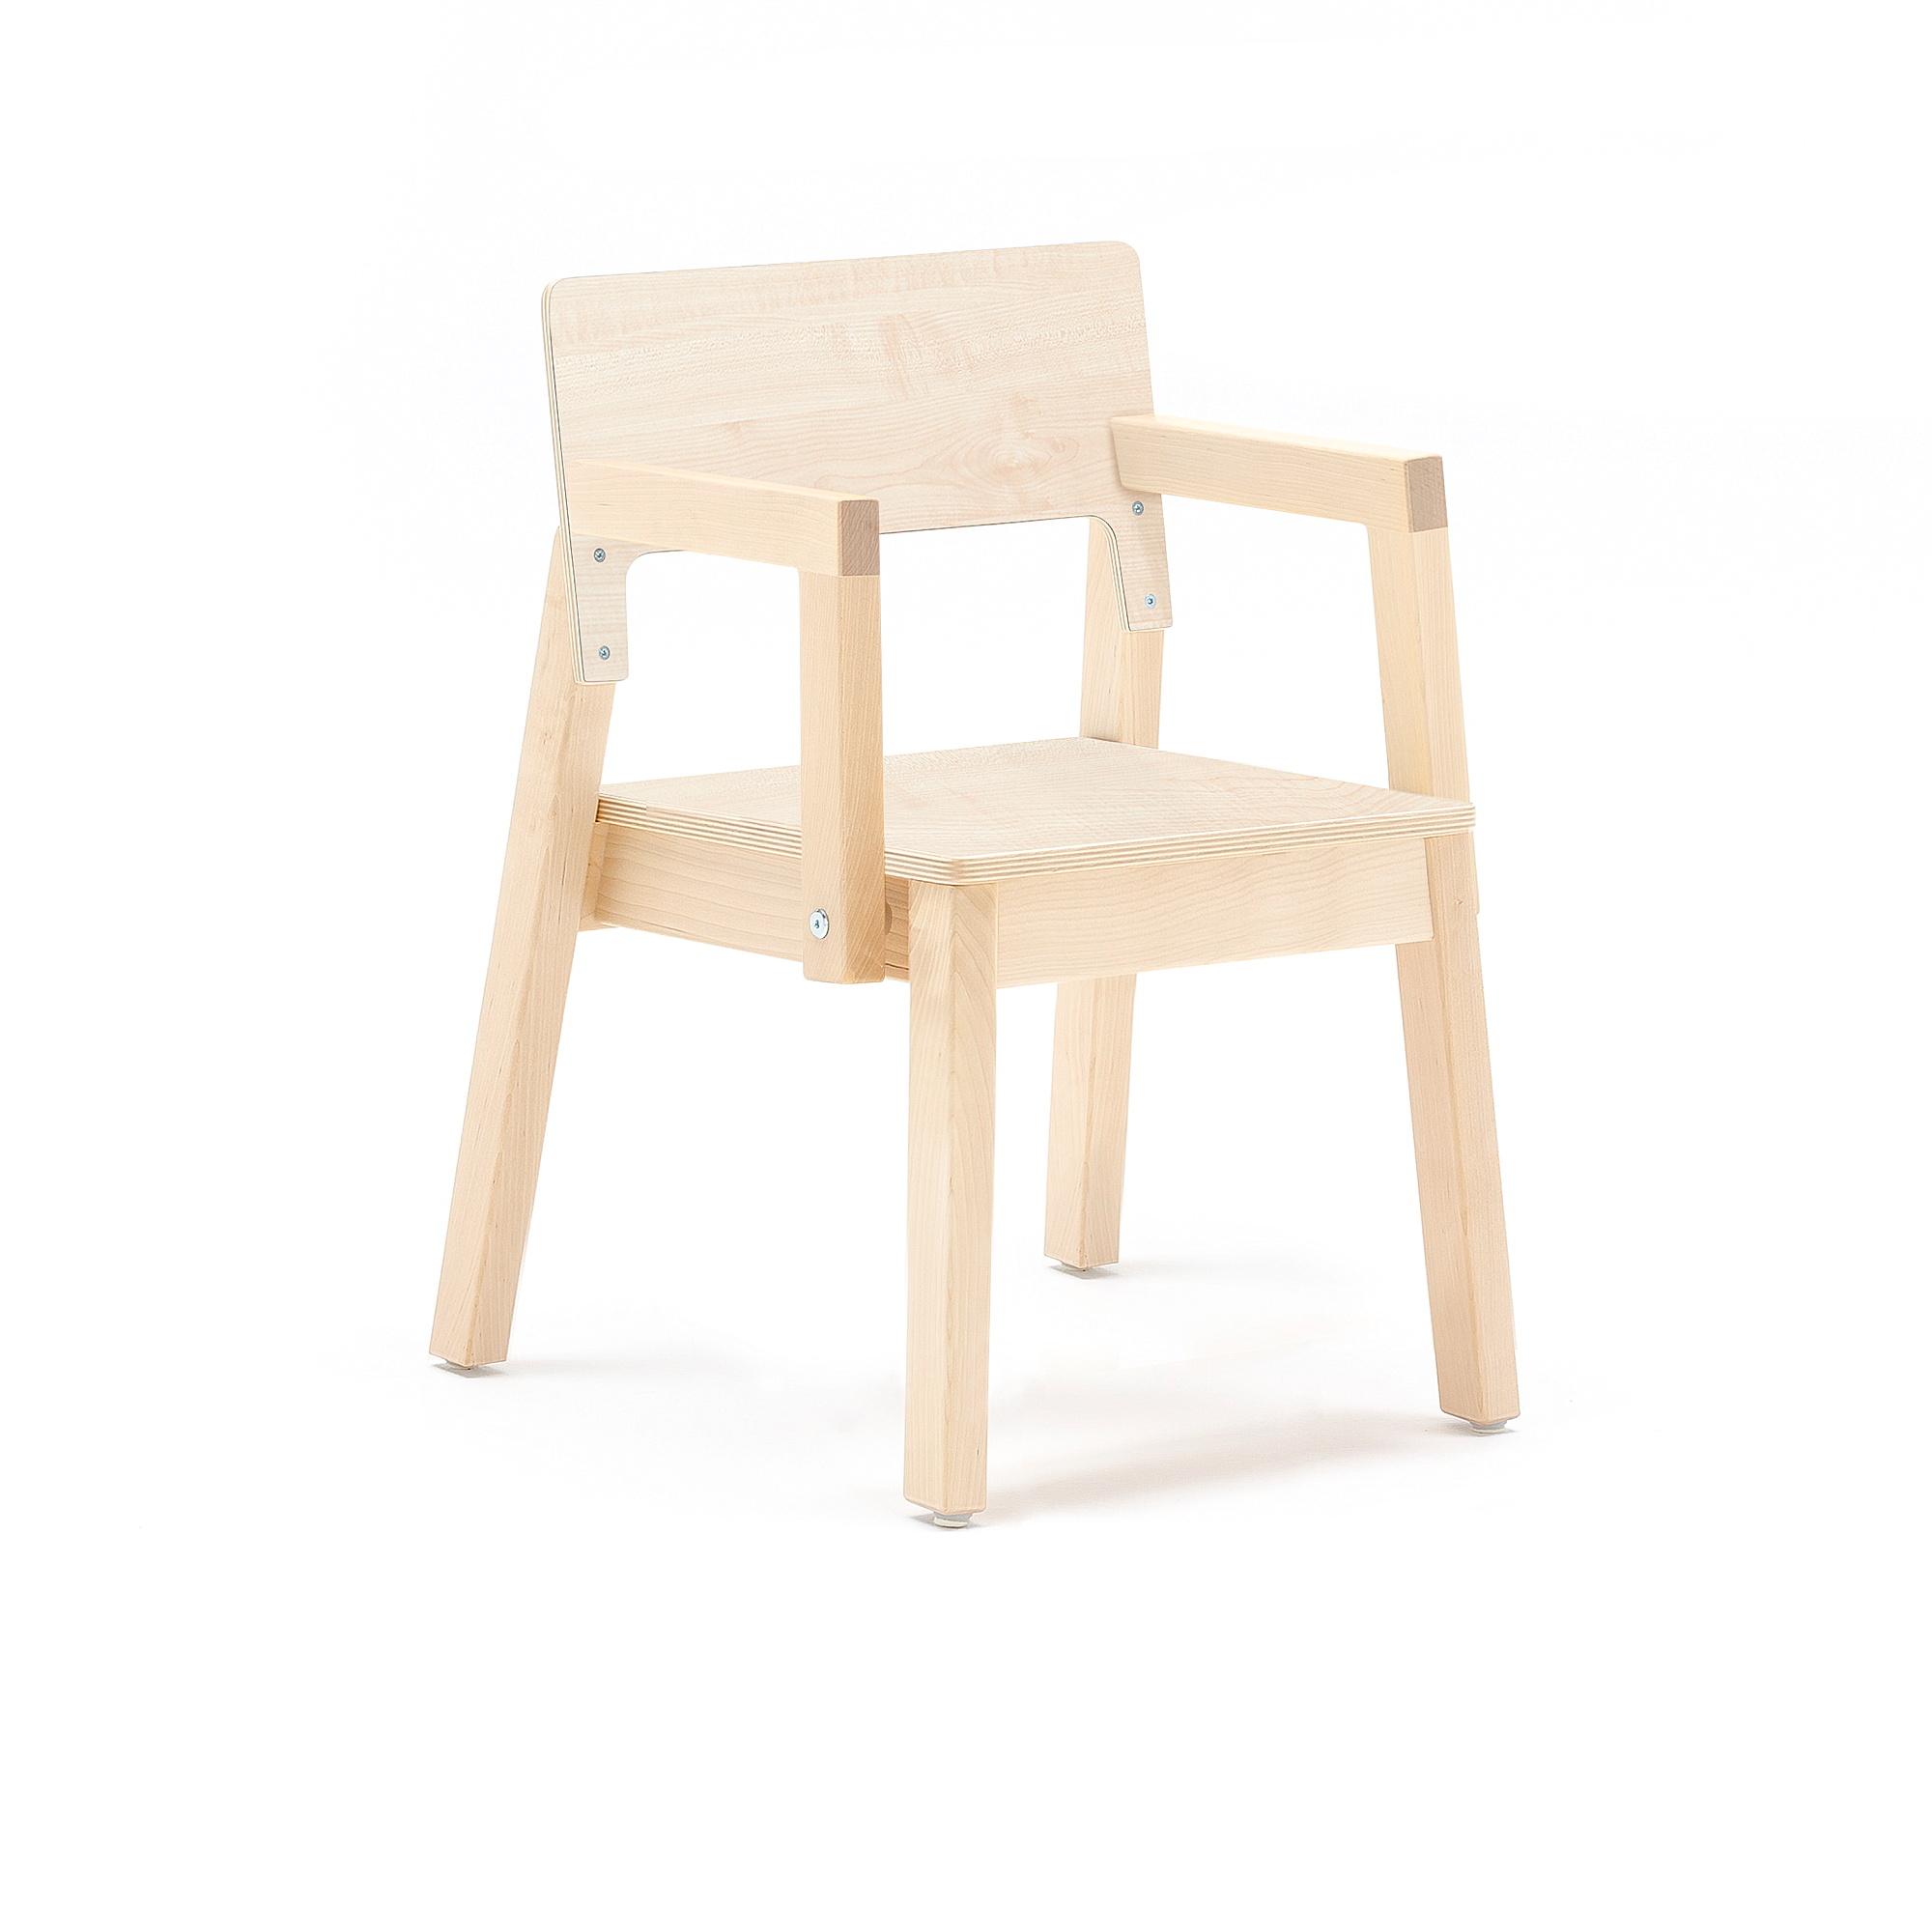 E-shop Detská stolička LOVE s opierkami rúk, V 350 mm, breza, laminát - breza